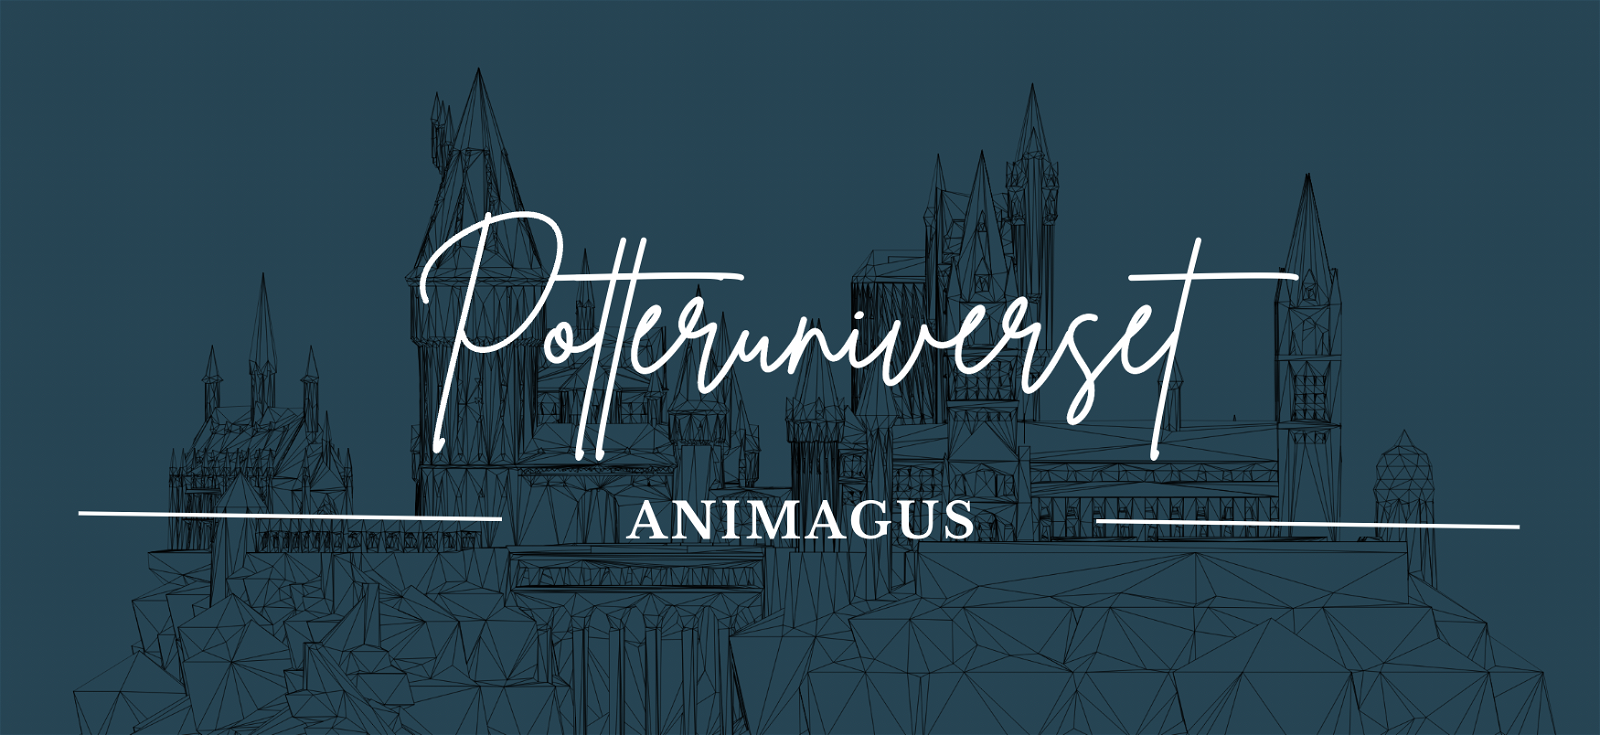 Potteruniverset: Animagus